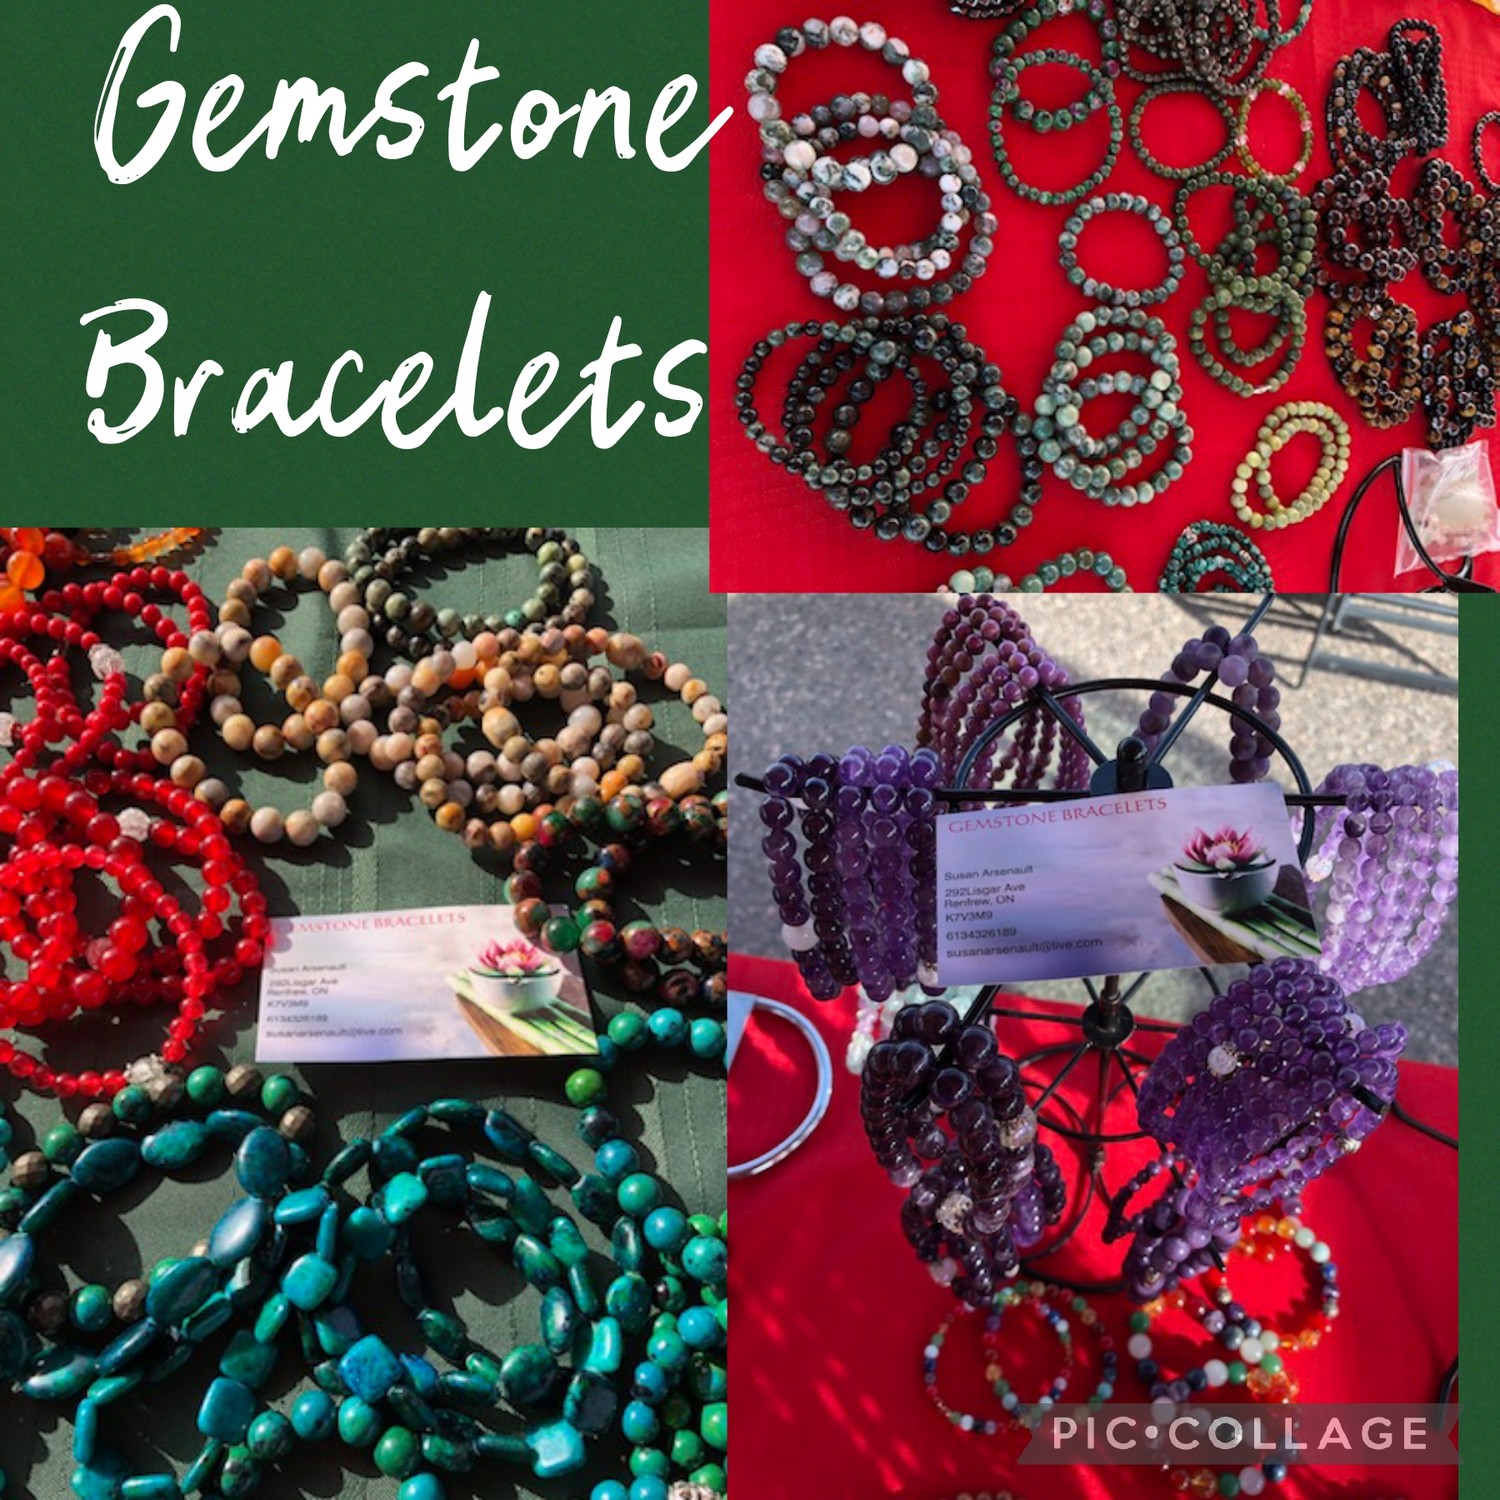 Gemstone Bracelets 
Semi Precious Stones for everyone handmade by Suesan Arsenault